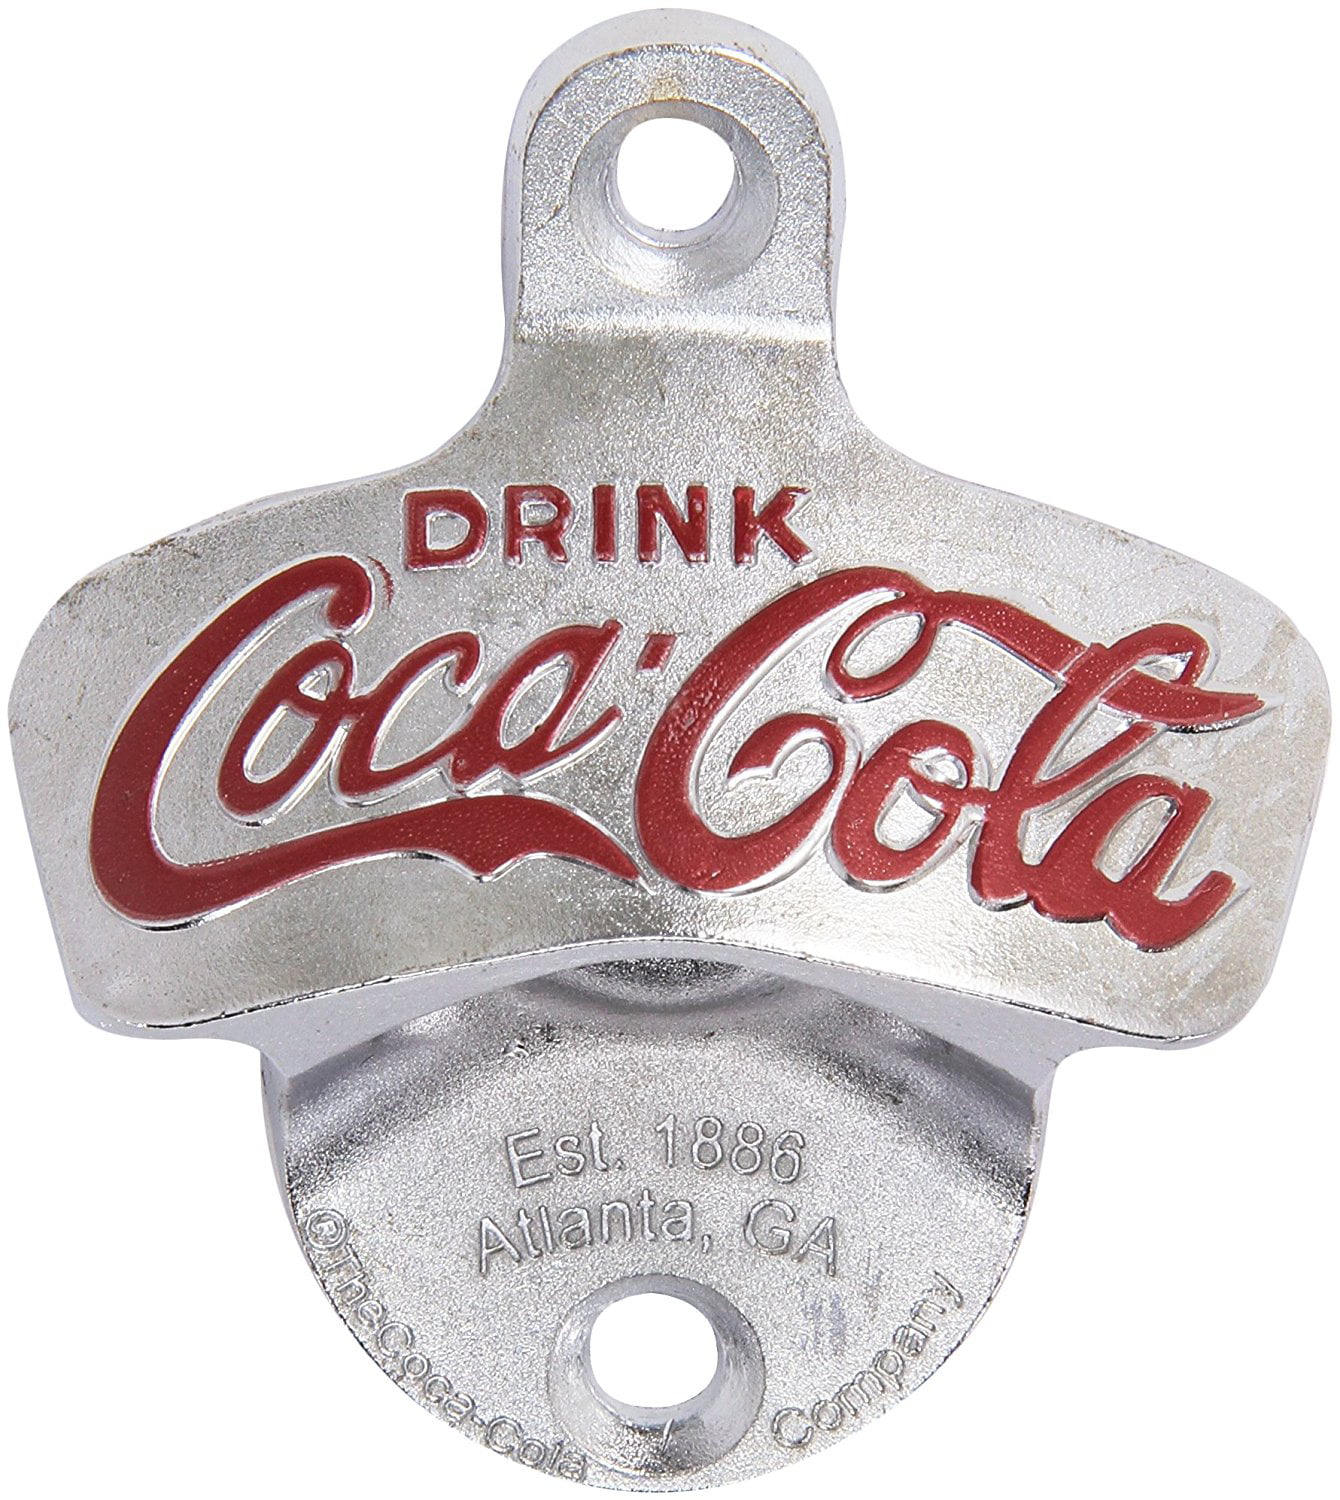 TableCraft Coca-Cola Wall Mount Bottle Opener with Cap Catcher